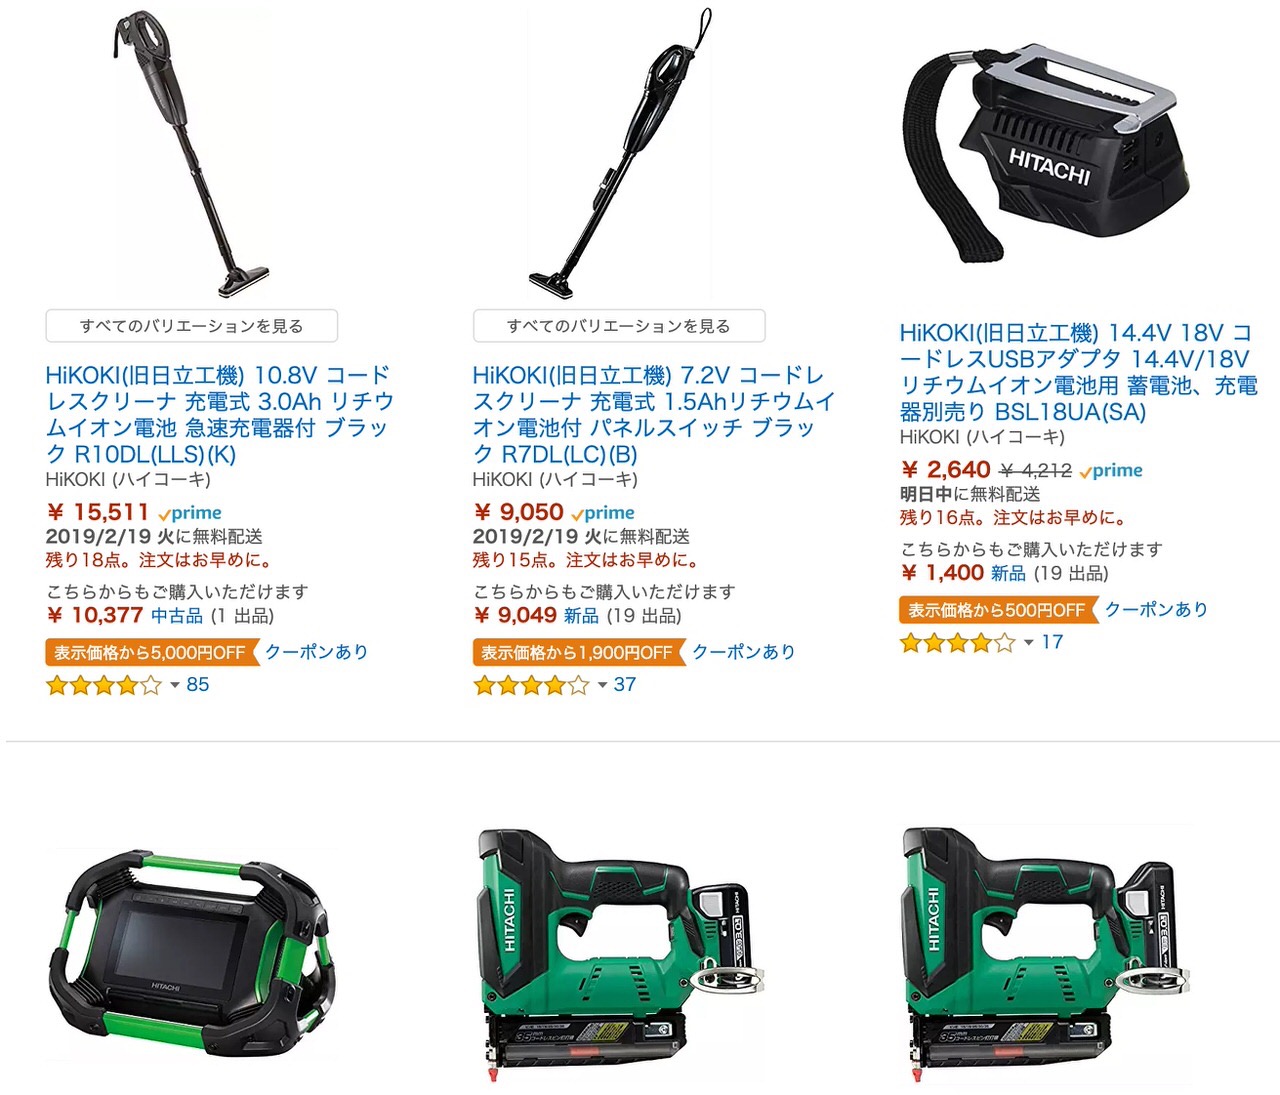 【Amazon】「HiKOKI（ハイコーキ：旧日立工機）」コードレス掃除機や電動工具がクーポンセール実施中 - ネタフル